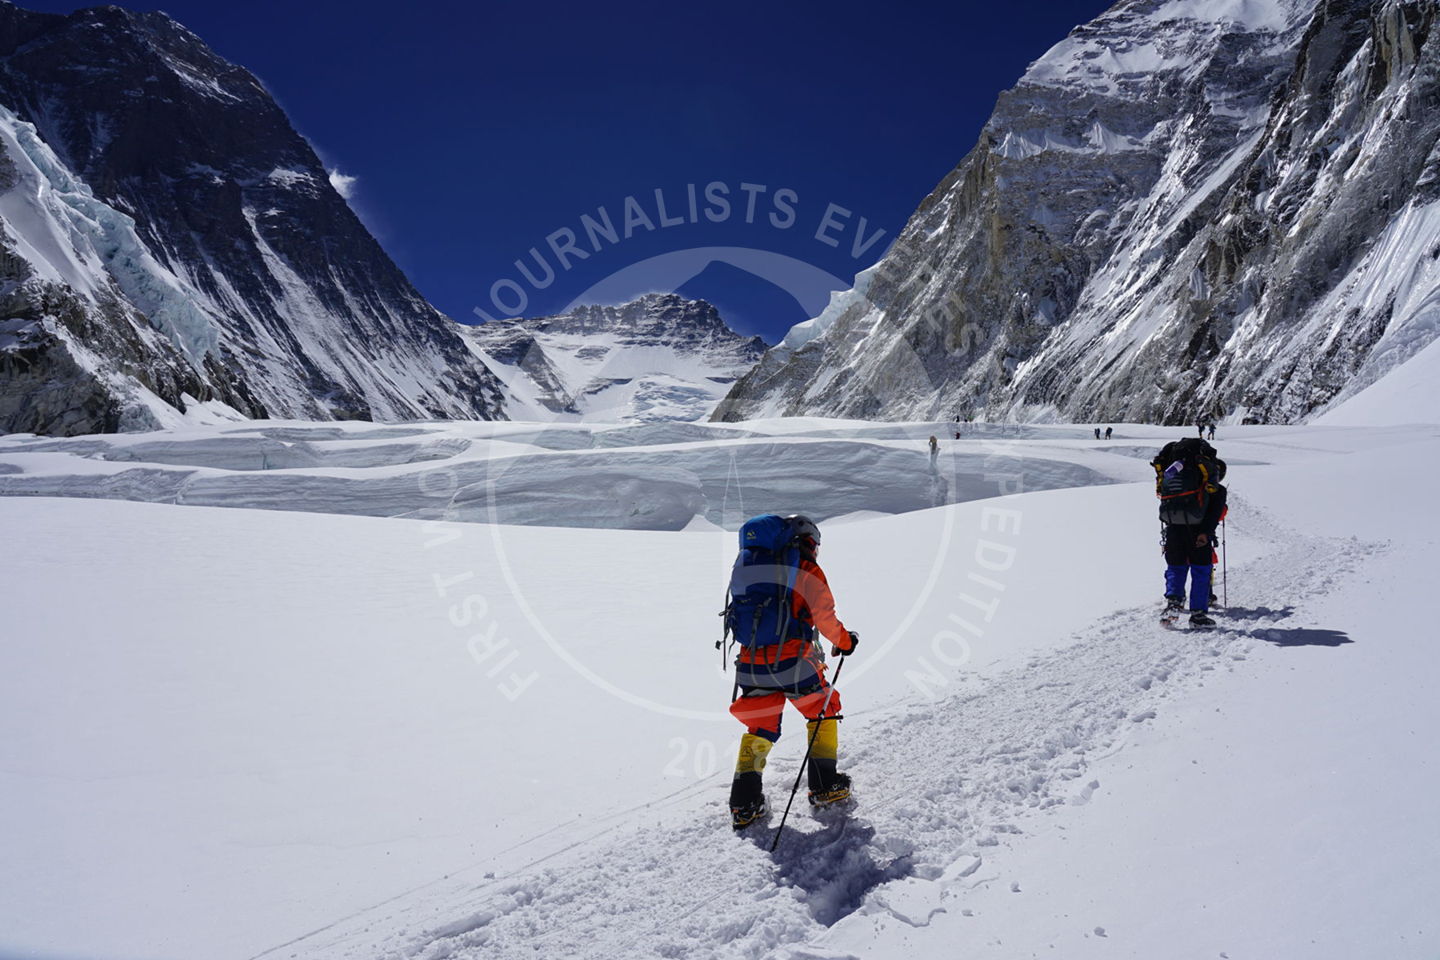 Mt. Everest (8848) Expedition via Nepal